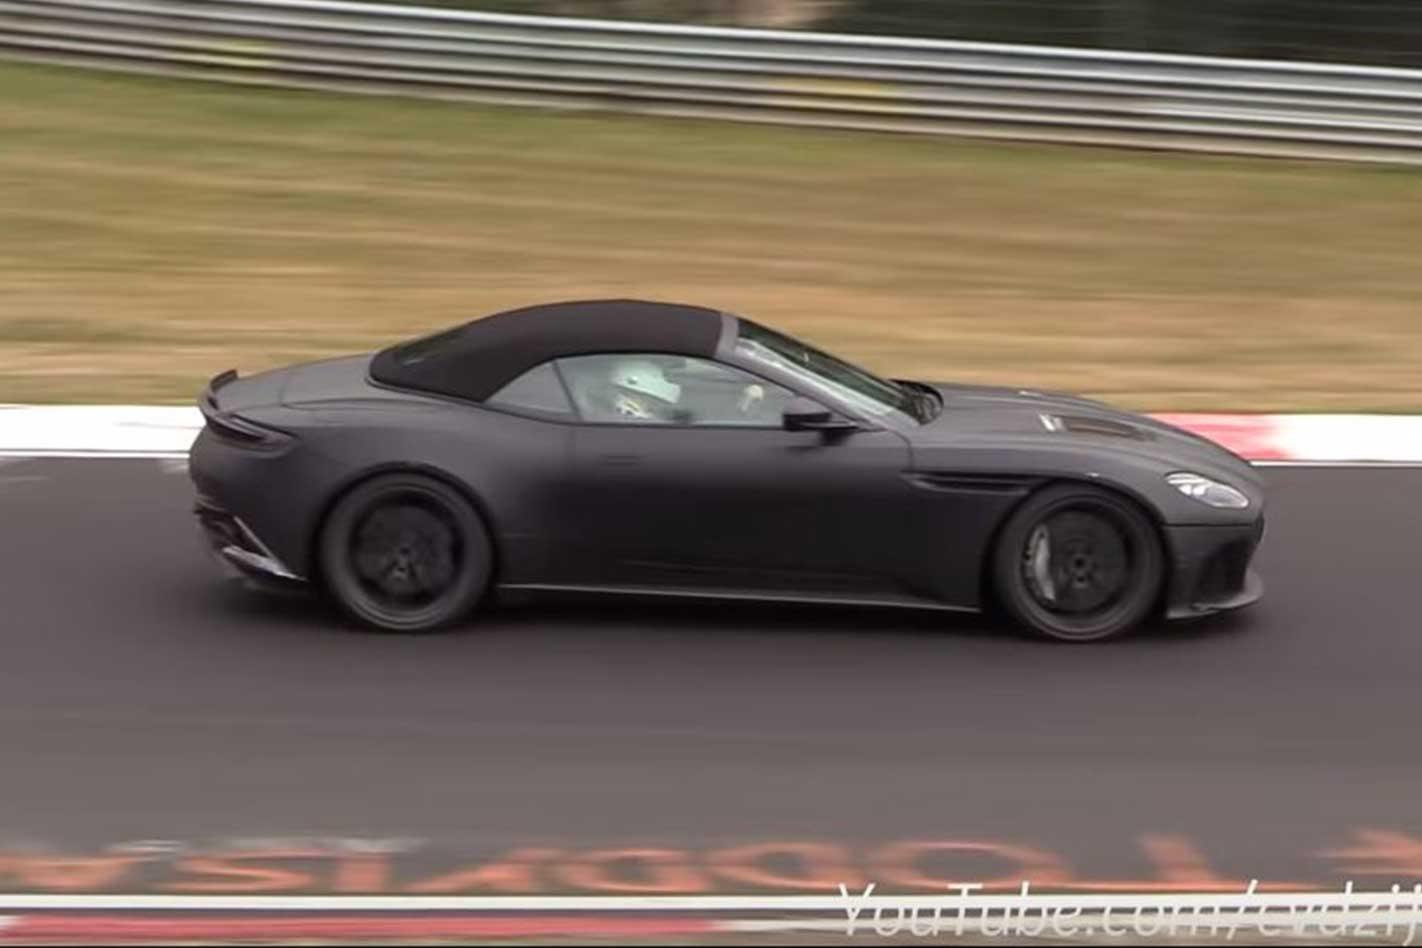 Aston Martin DBS Superleggera Volante testing Video